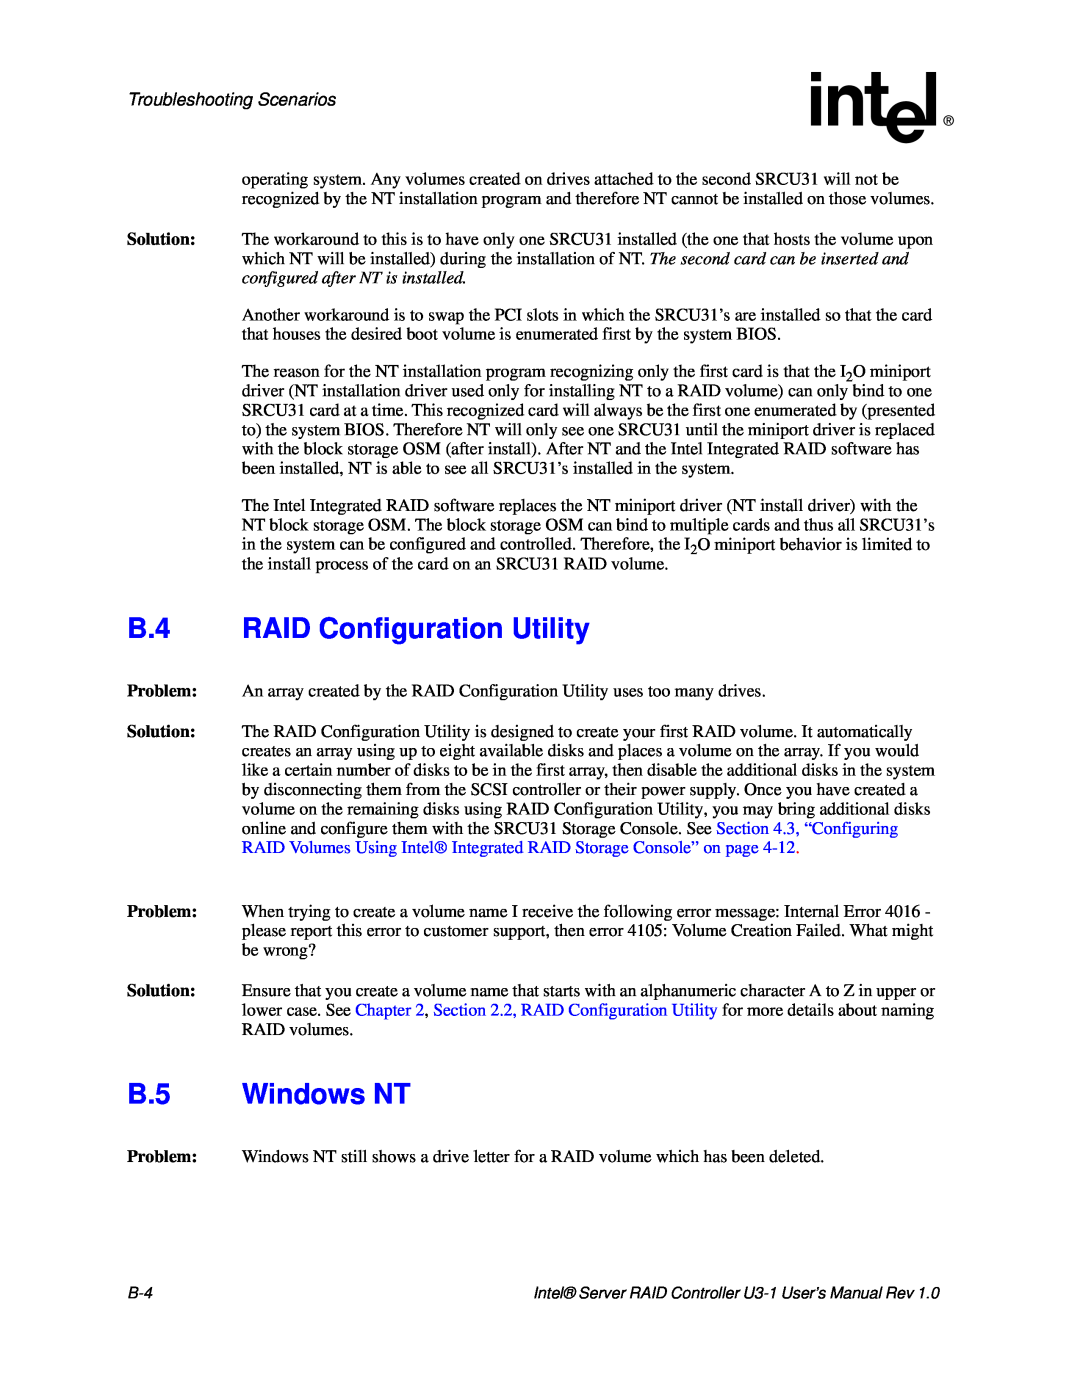 Intel SRCU31 user manual B.4 RAID Configuration Utility, B.5 Windows NT, Troubleshooting Scenarios 